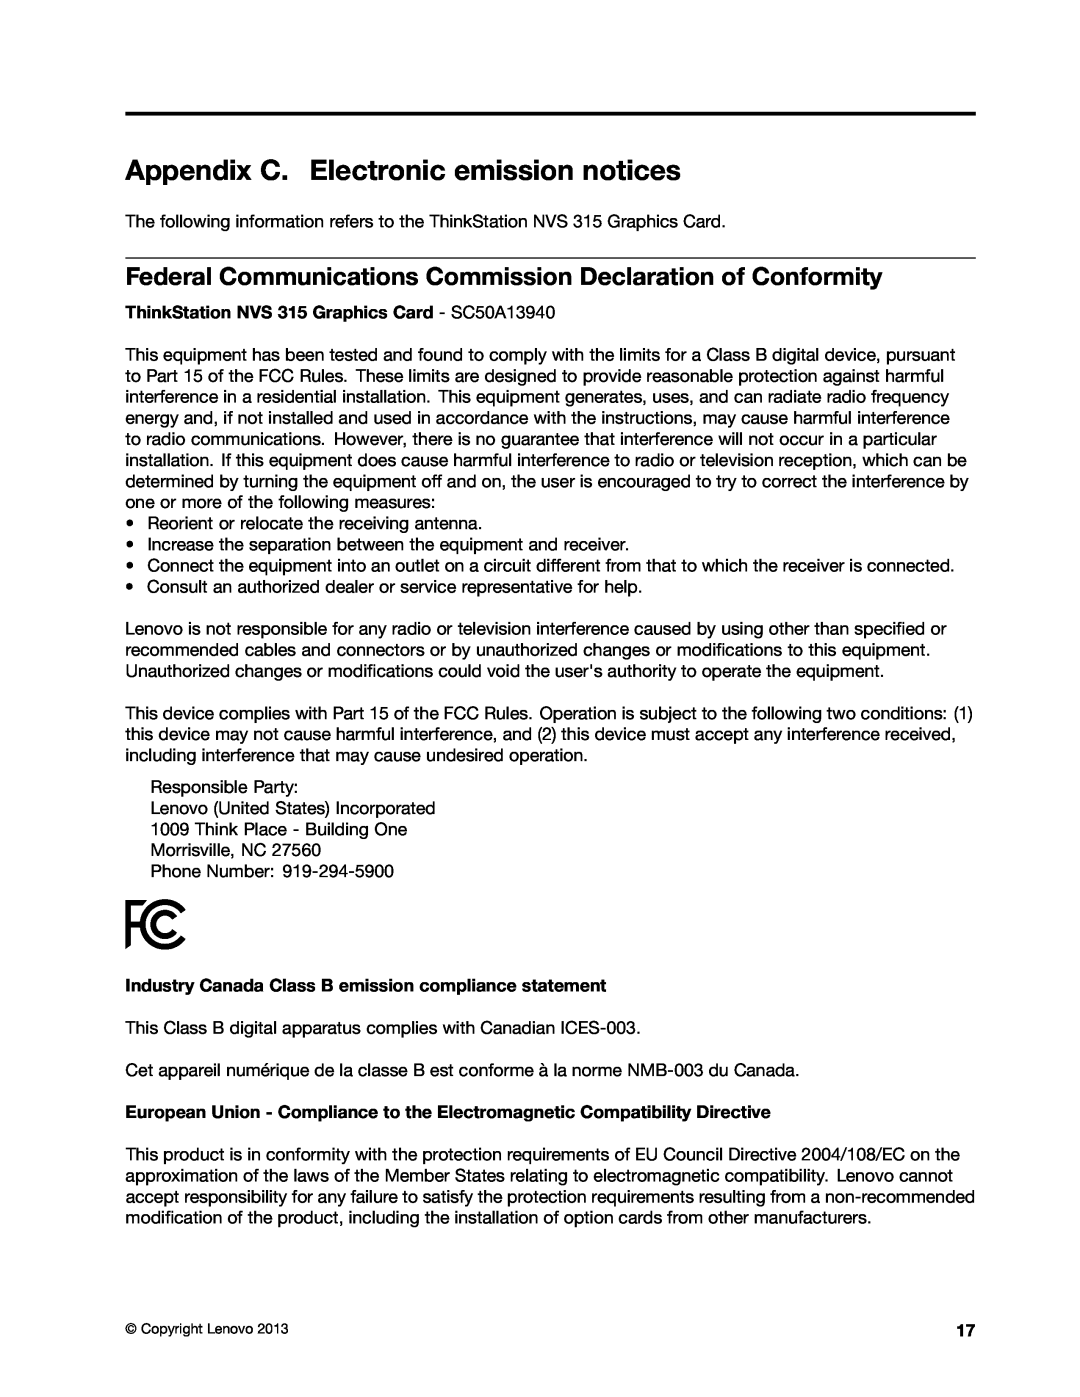 Lenovo manual Appendix C. Electronic emission notices, ThinkStation NVS 315 Graphics Card - SC50A13940 